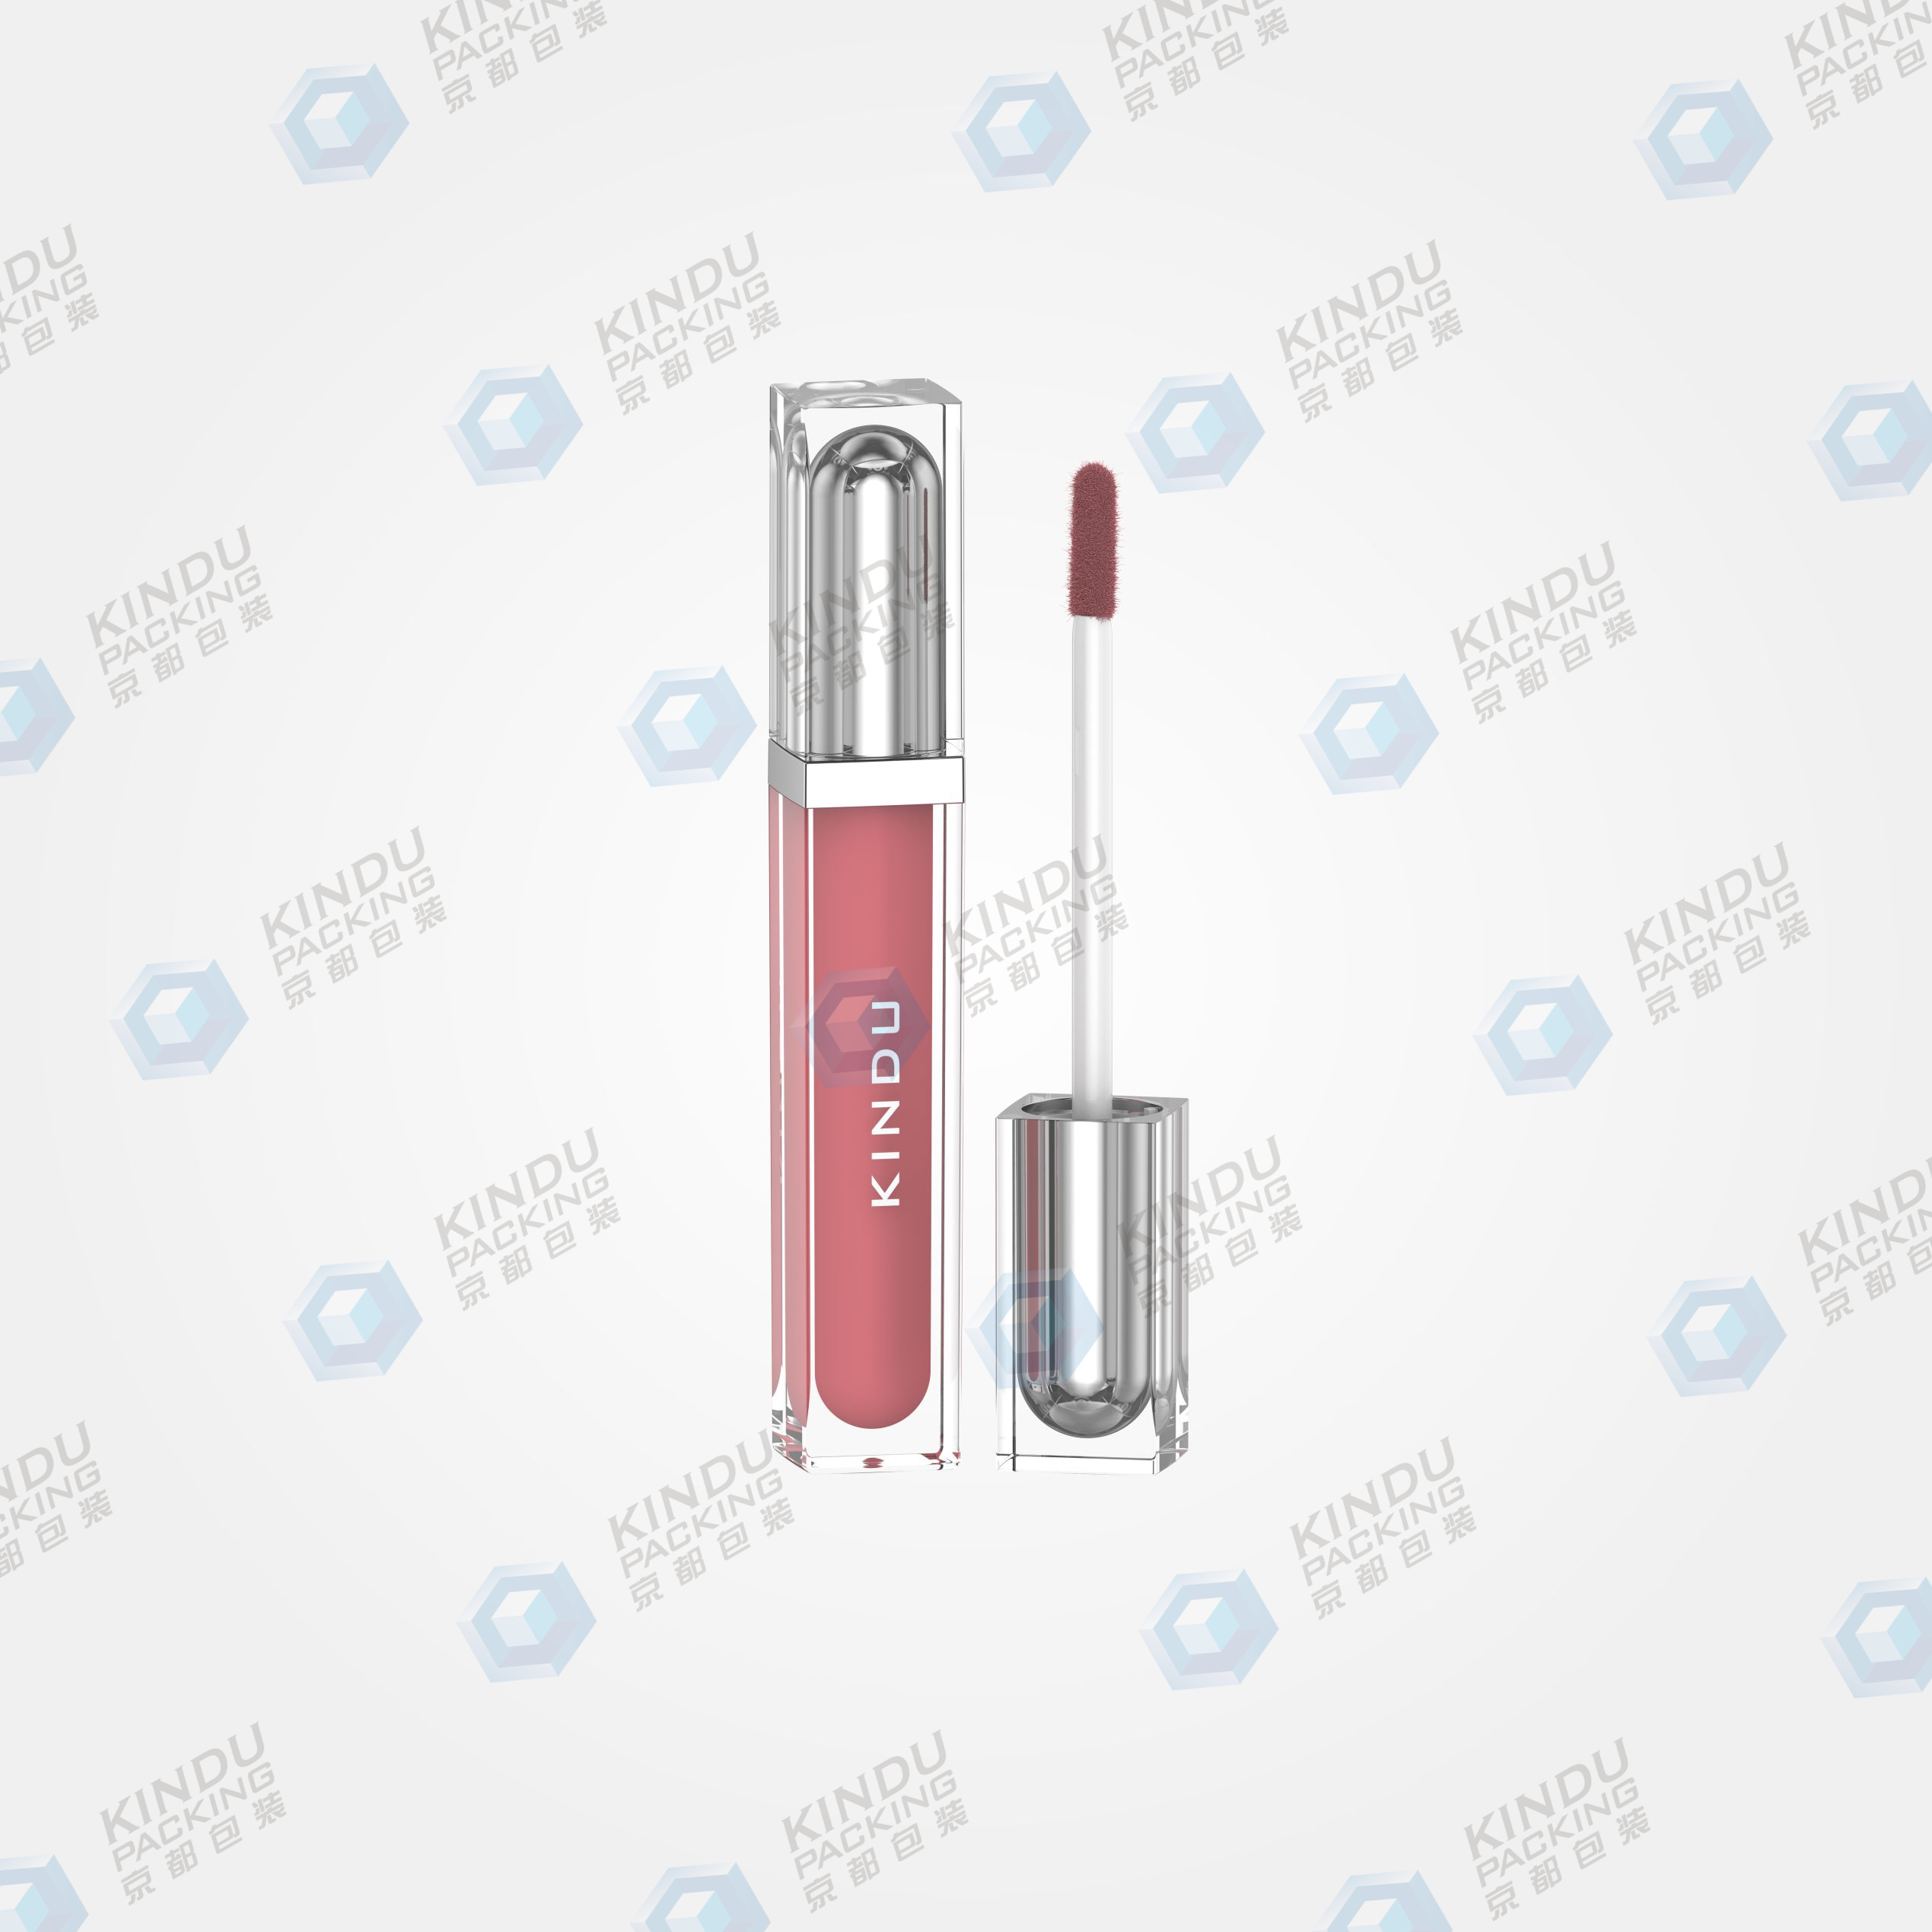 Square lip gloss packaging (ZH-J0021)